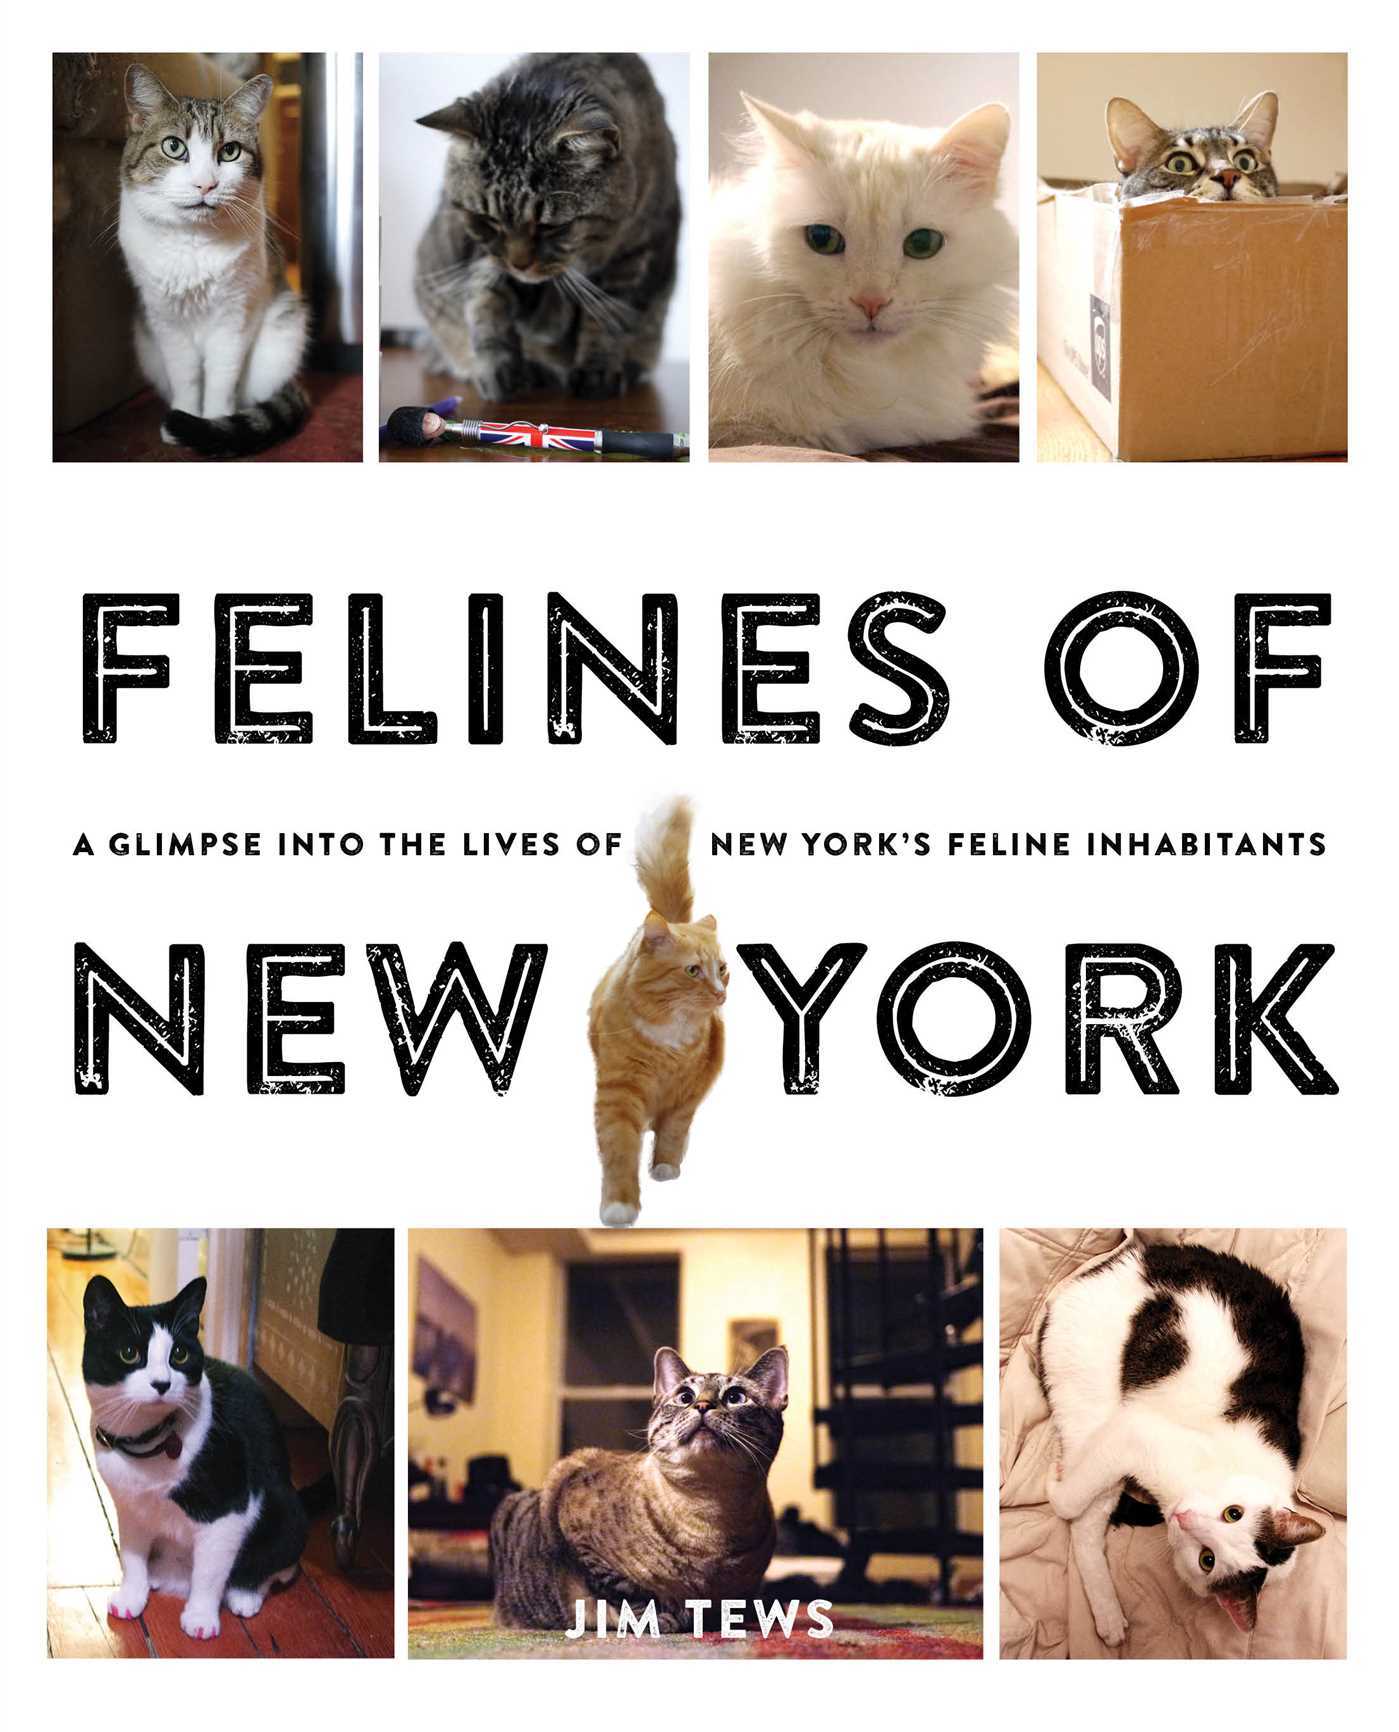 Felines of New York: A Glimpse Into the Lives of New York's Feline Inhabitants